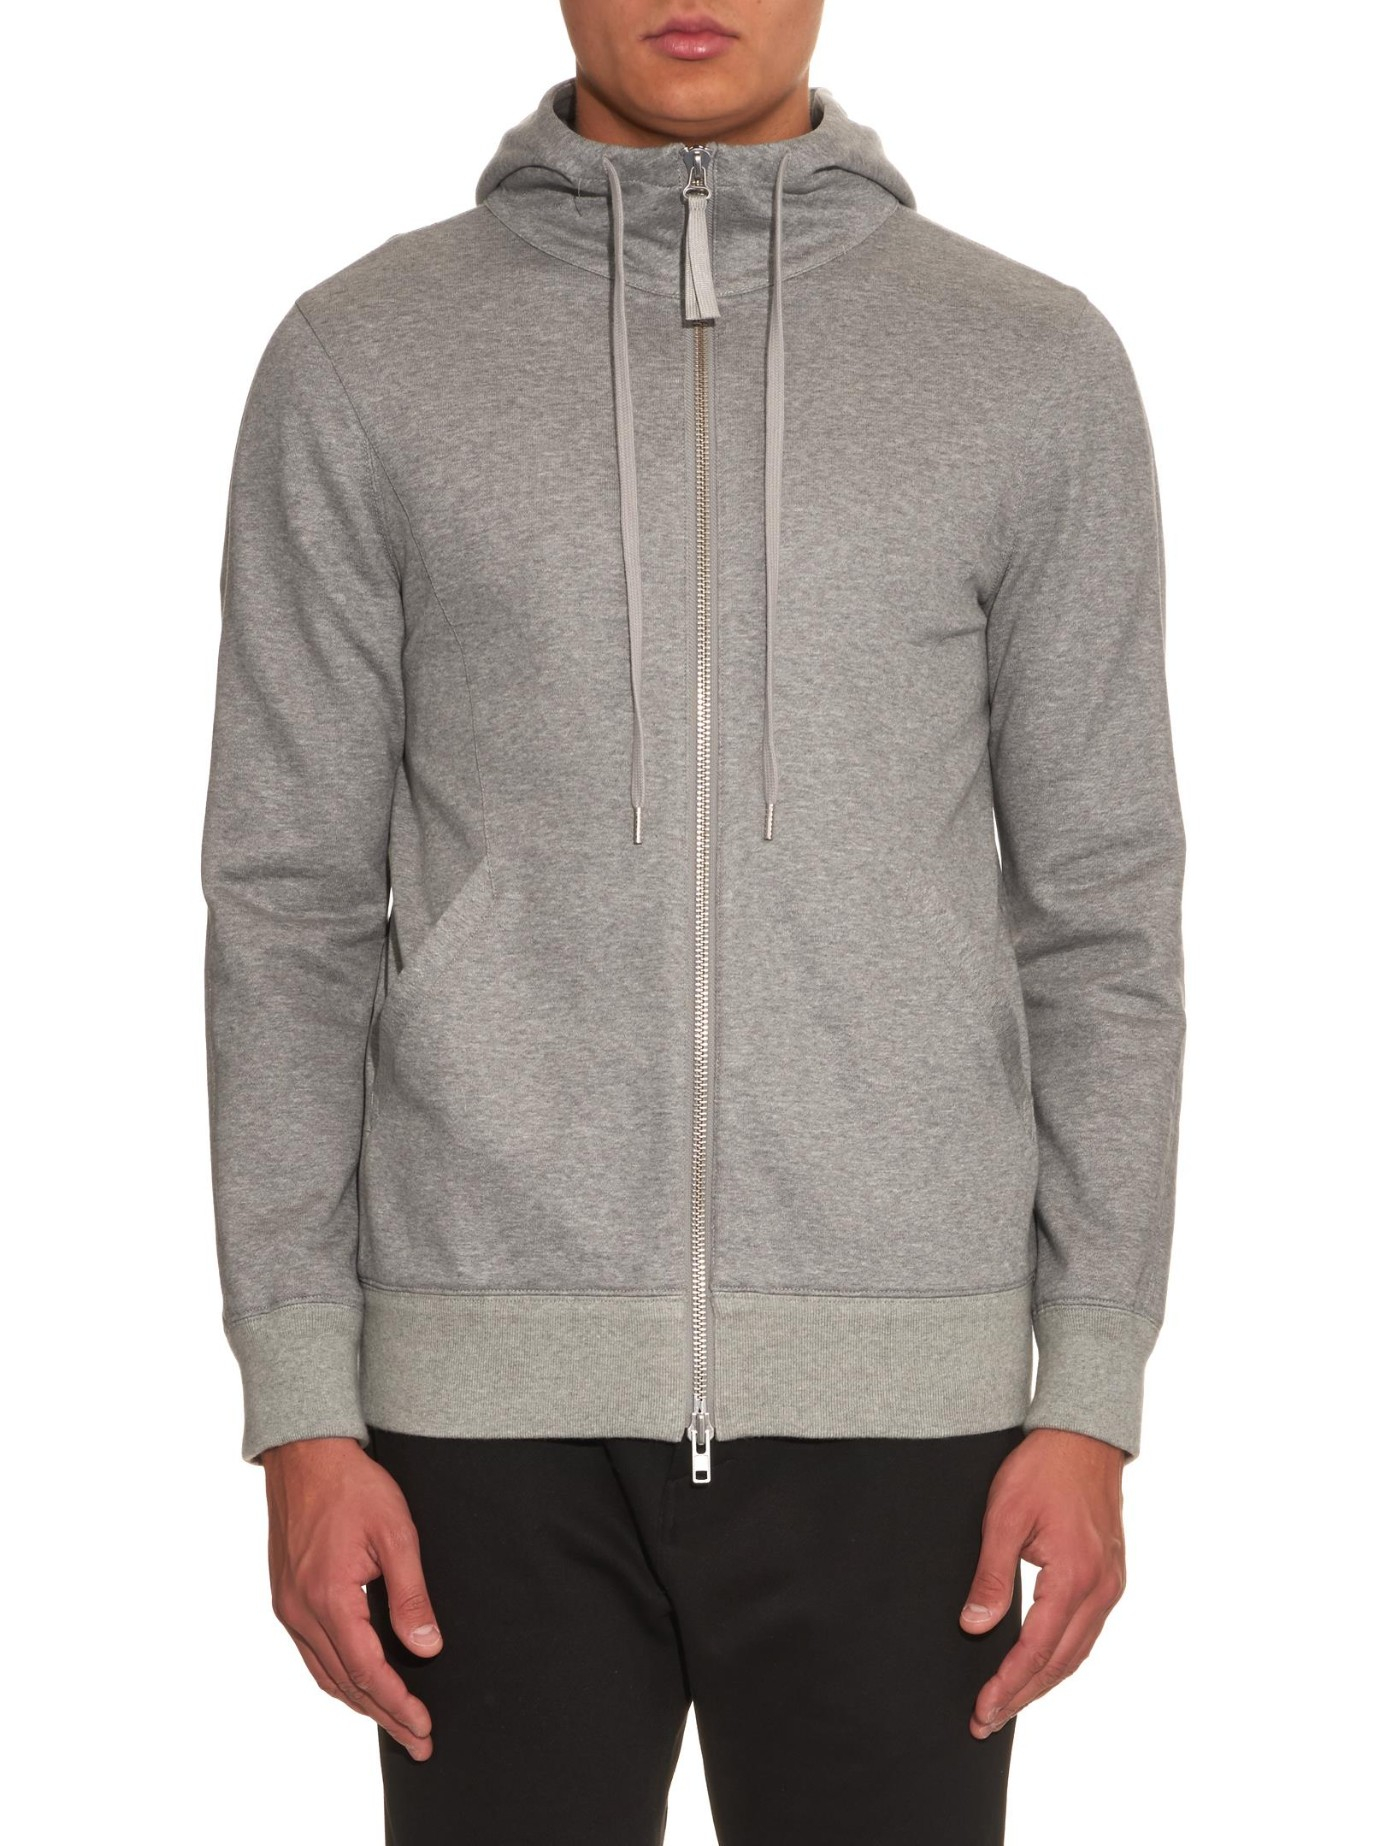 Lyst - Helmut Lang Flat-loop French-terry Hooded Sweatshirt in Gray for Men